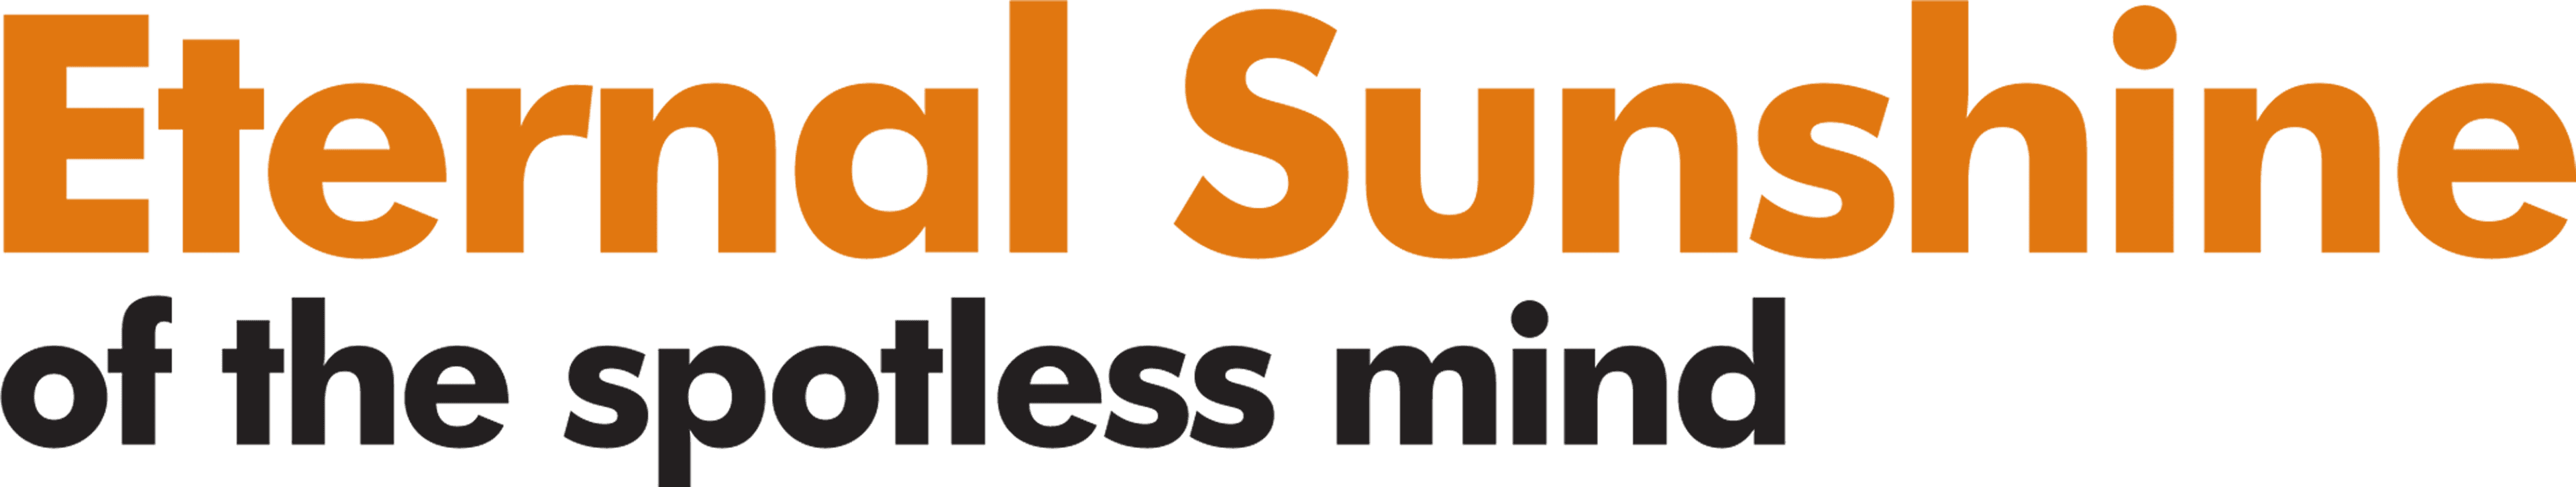 Eternal Sunshine of the Spotless Mind logo